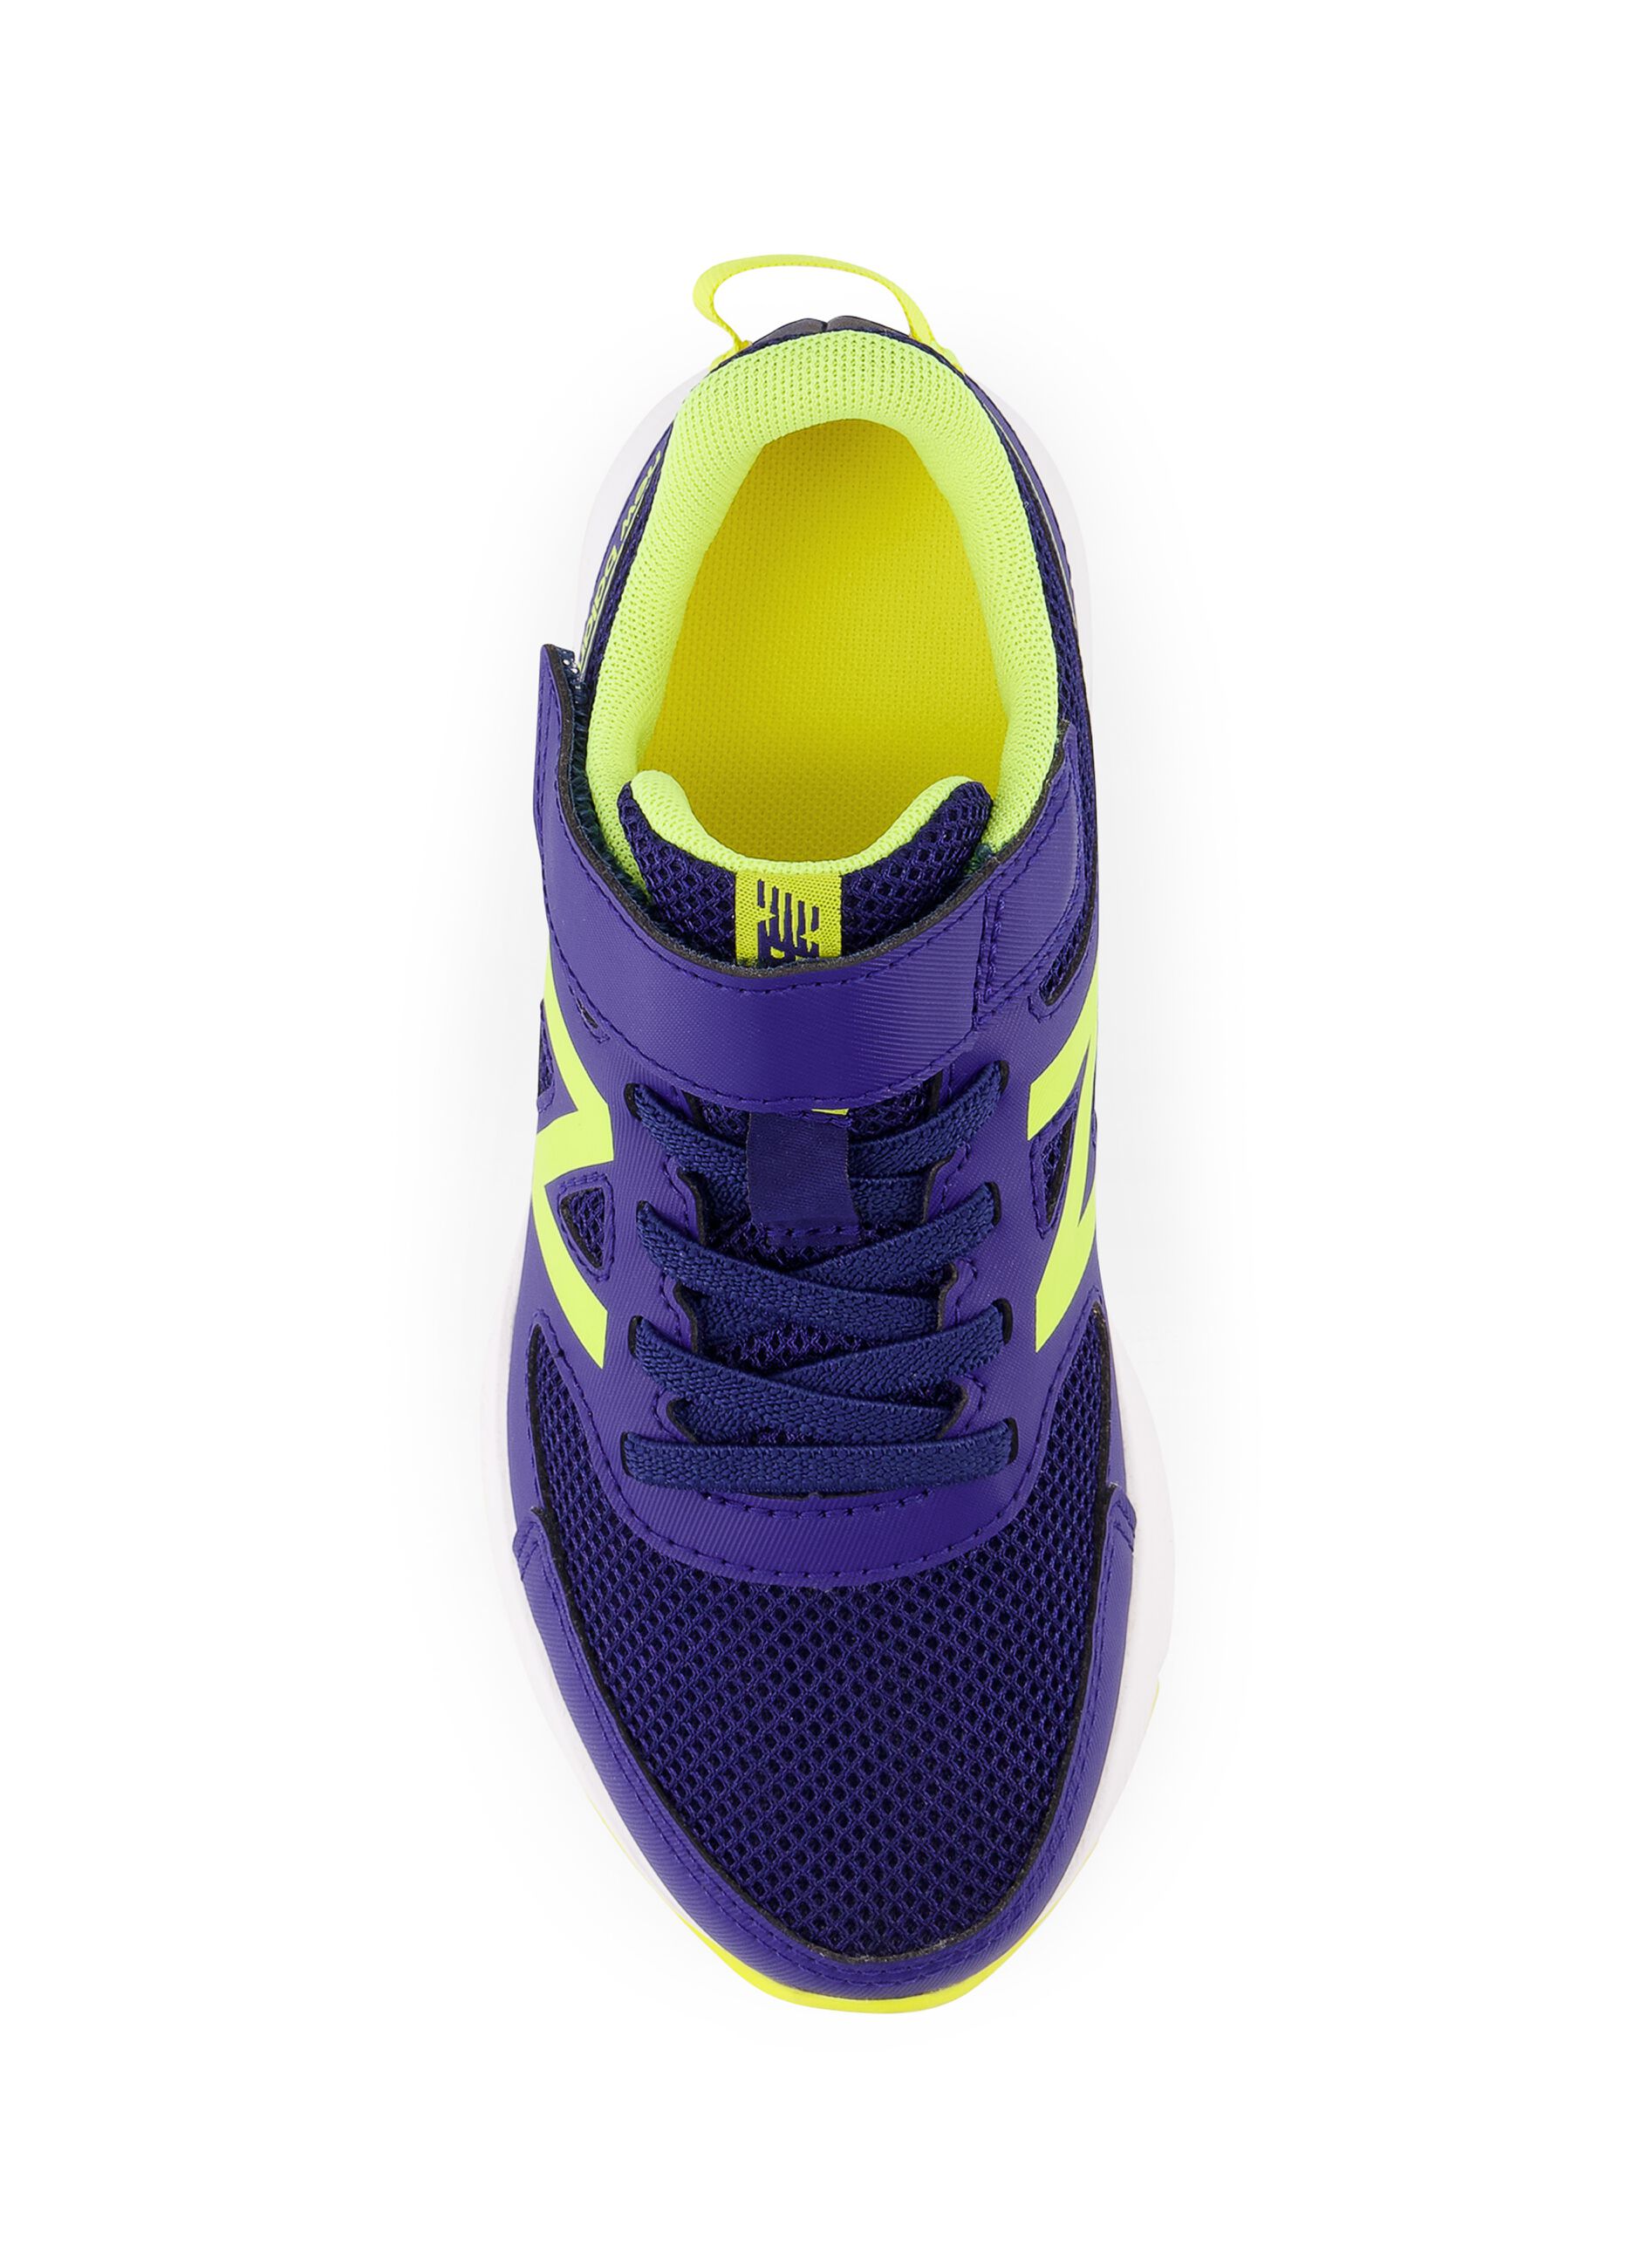 570v3 running shoes